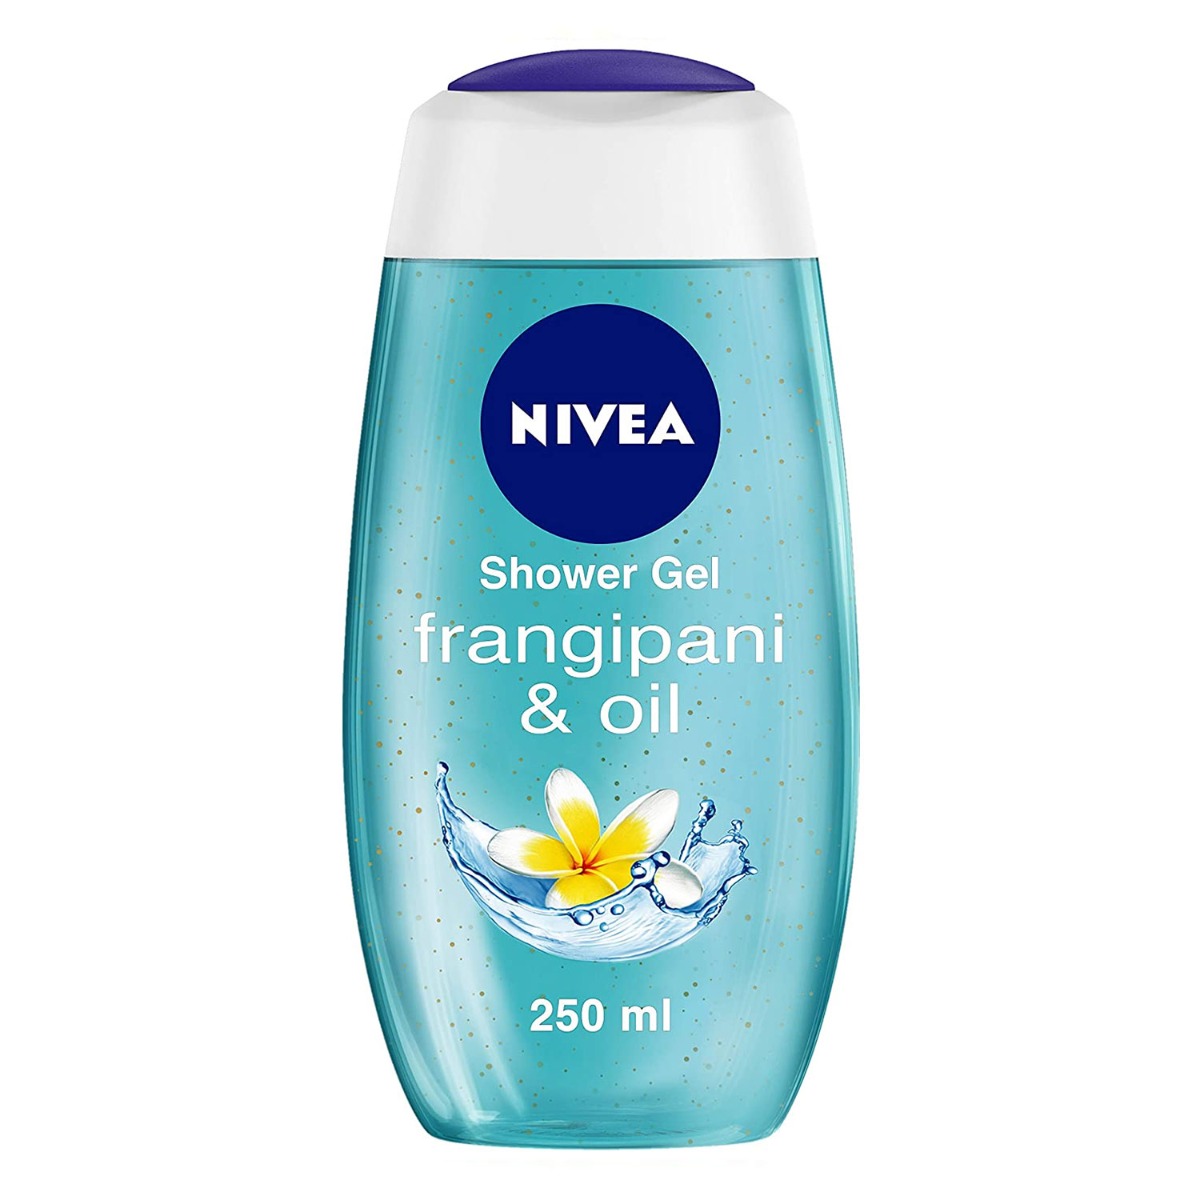 Nivea frangipani and oil shower gel, 250ml